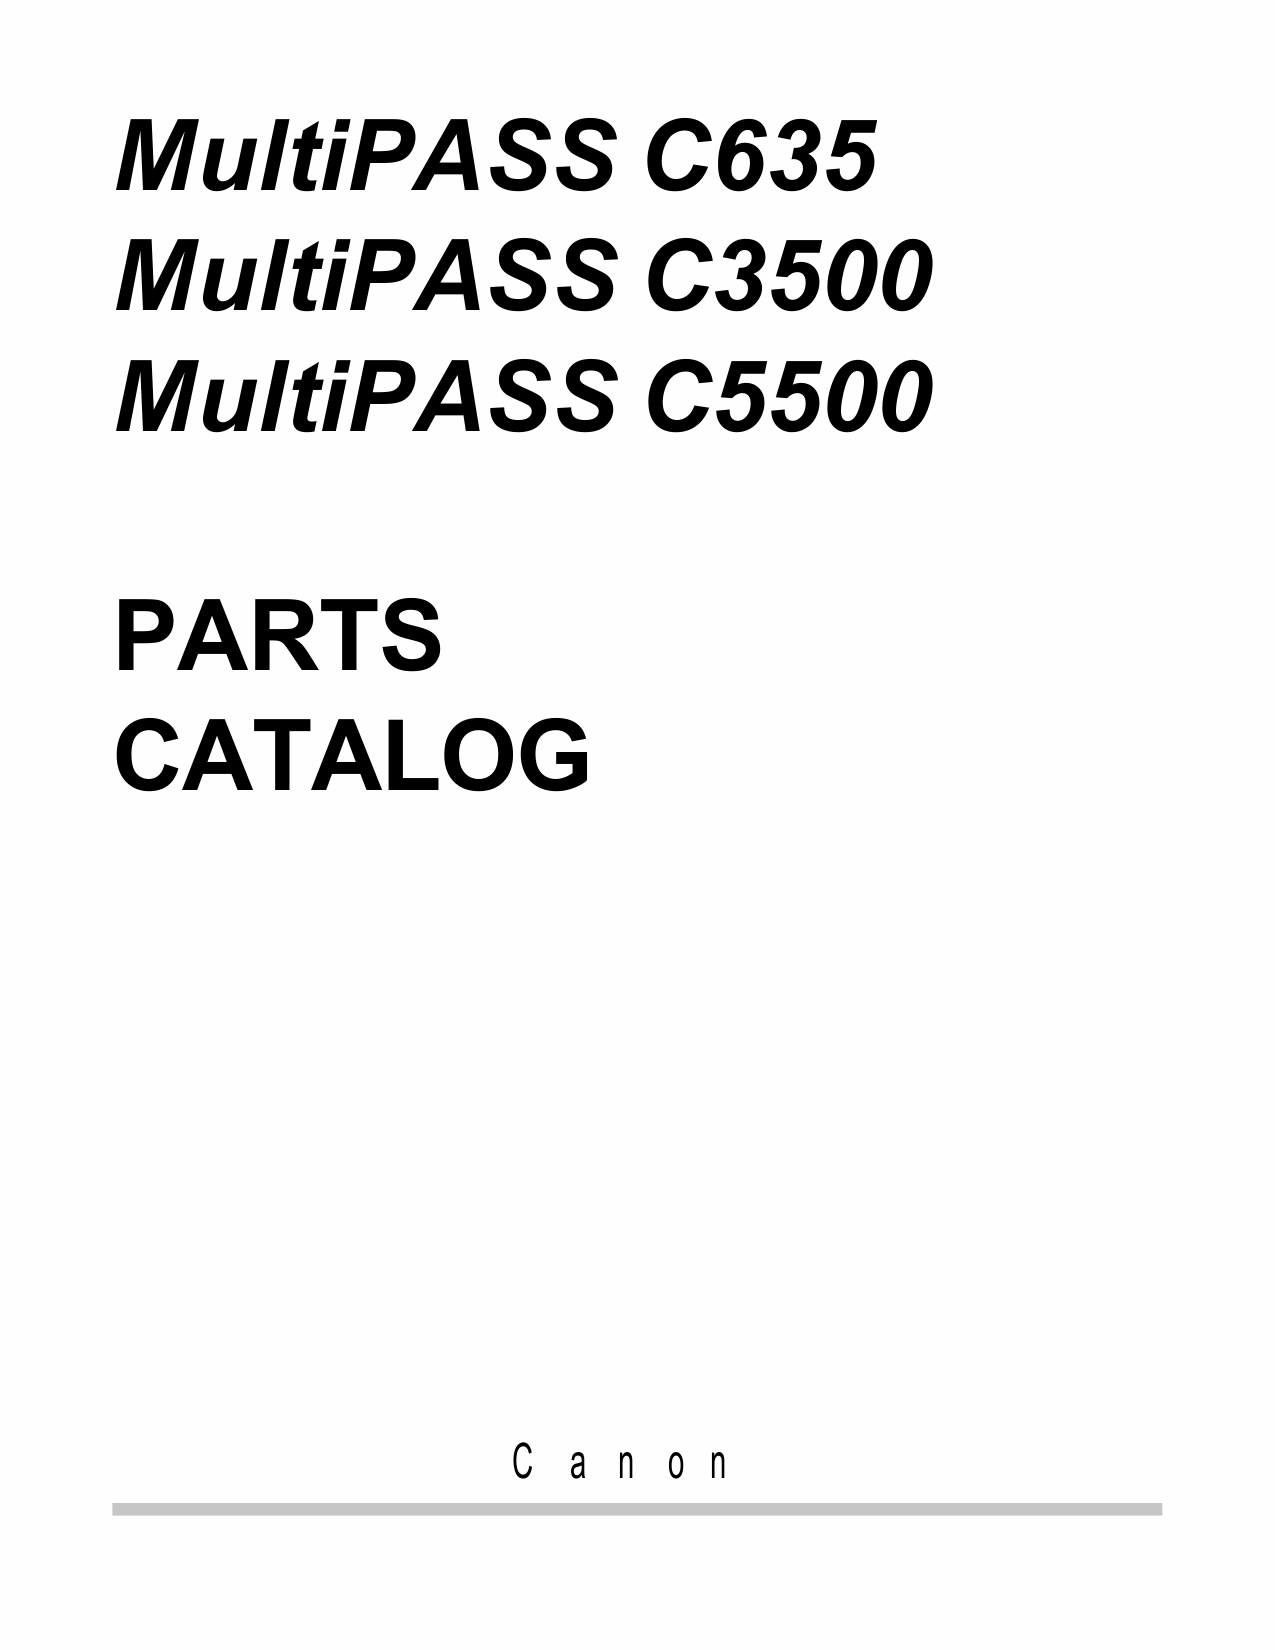 Canon MultiPASS MP-C635 C3500 C5500 Parts Catalog Manual-1